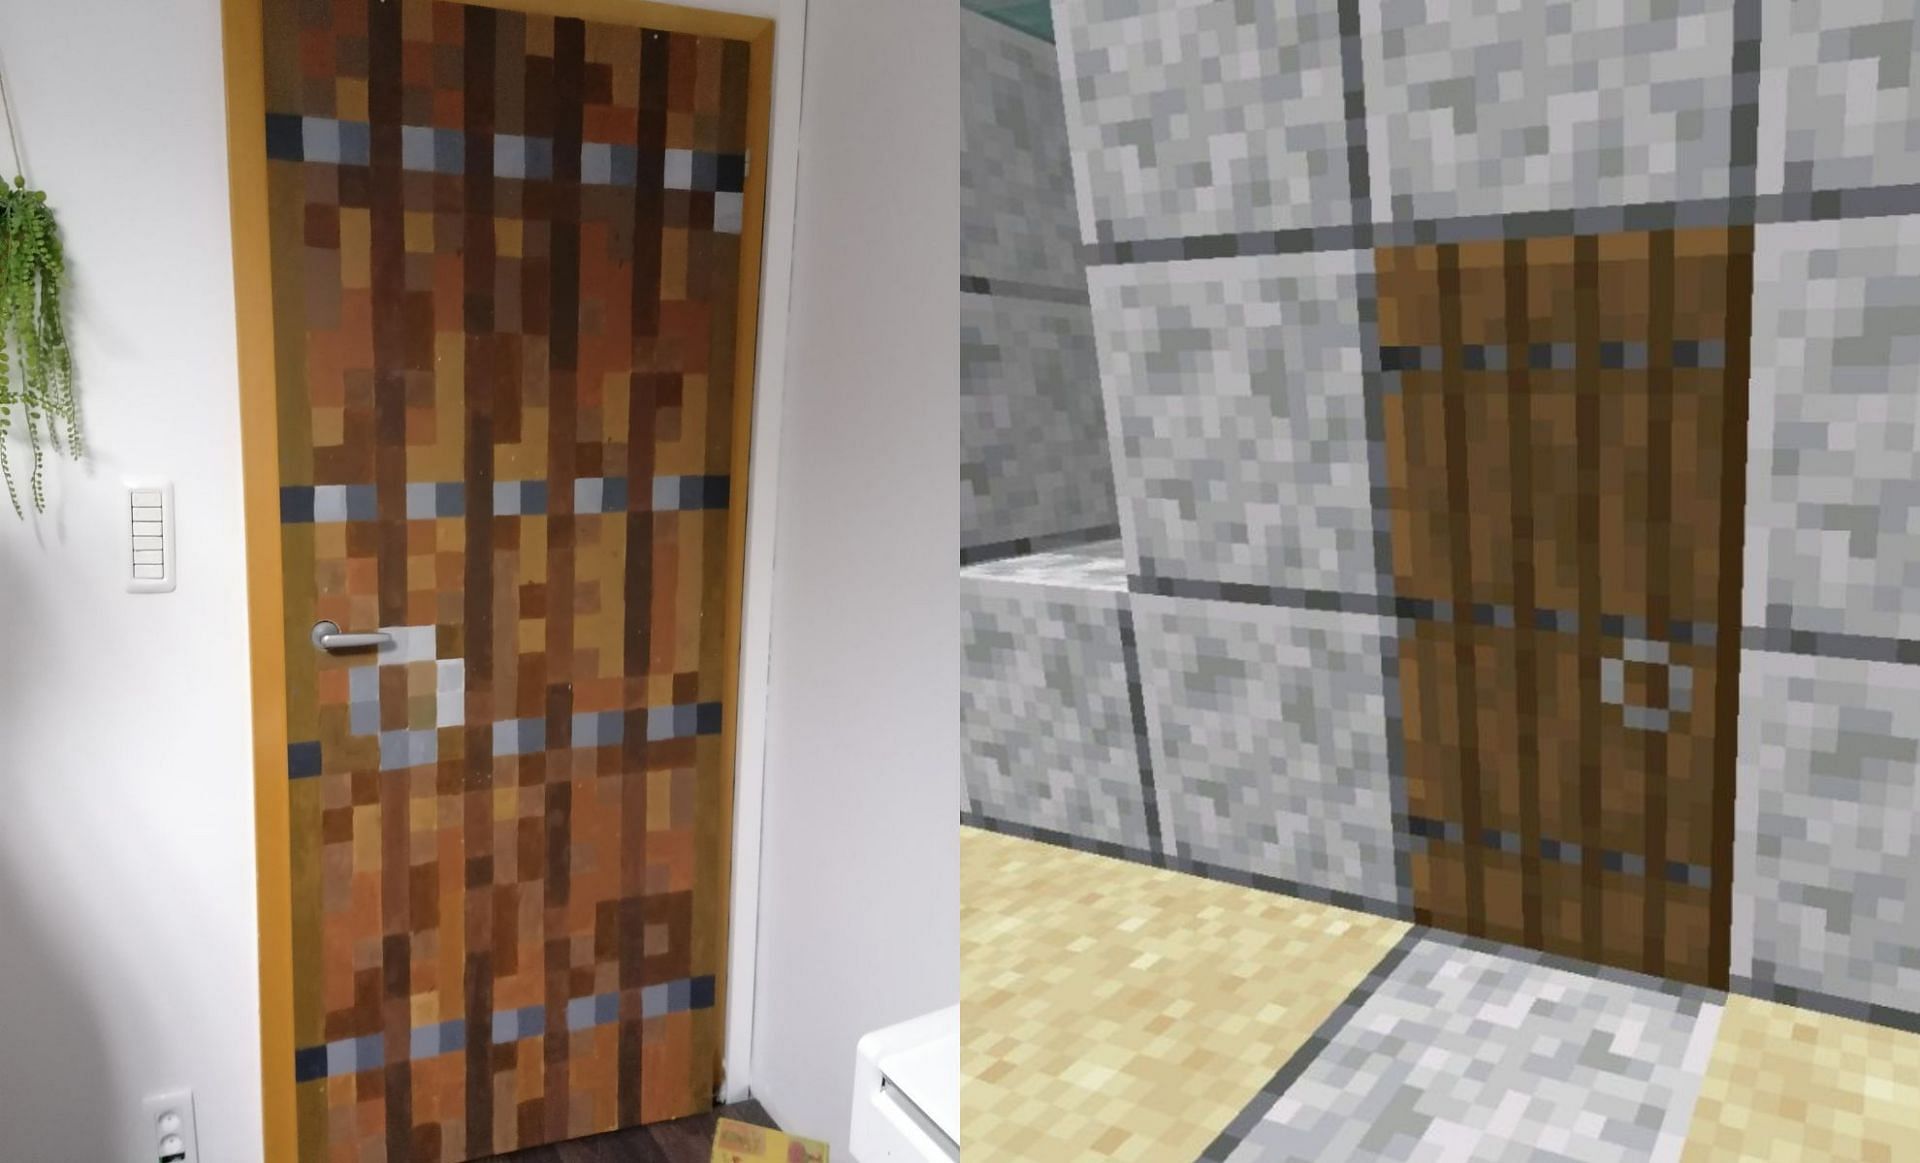 The real door and the virtual door (Image via u/Tiny_Chip813 on Reddit)